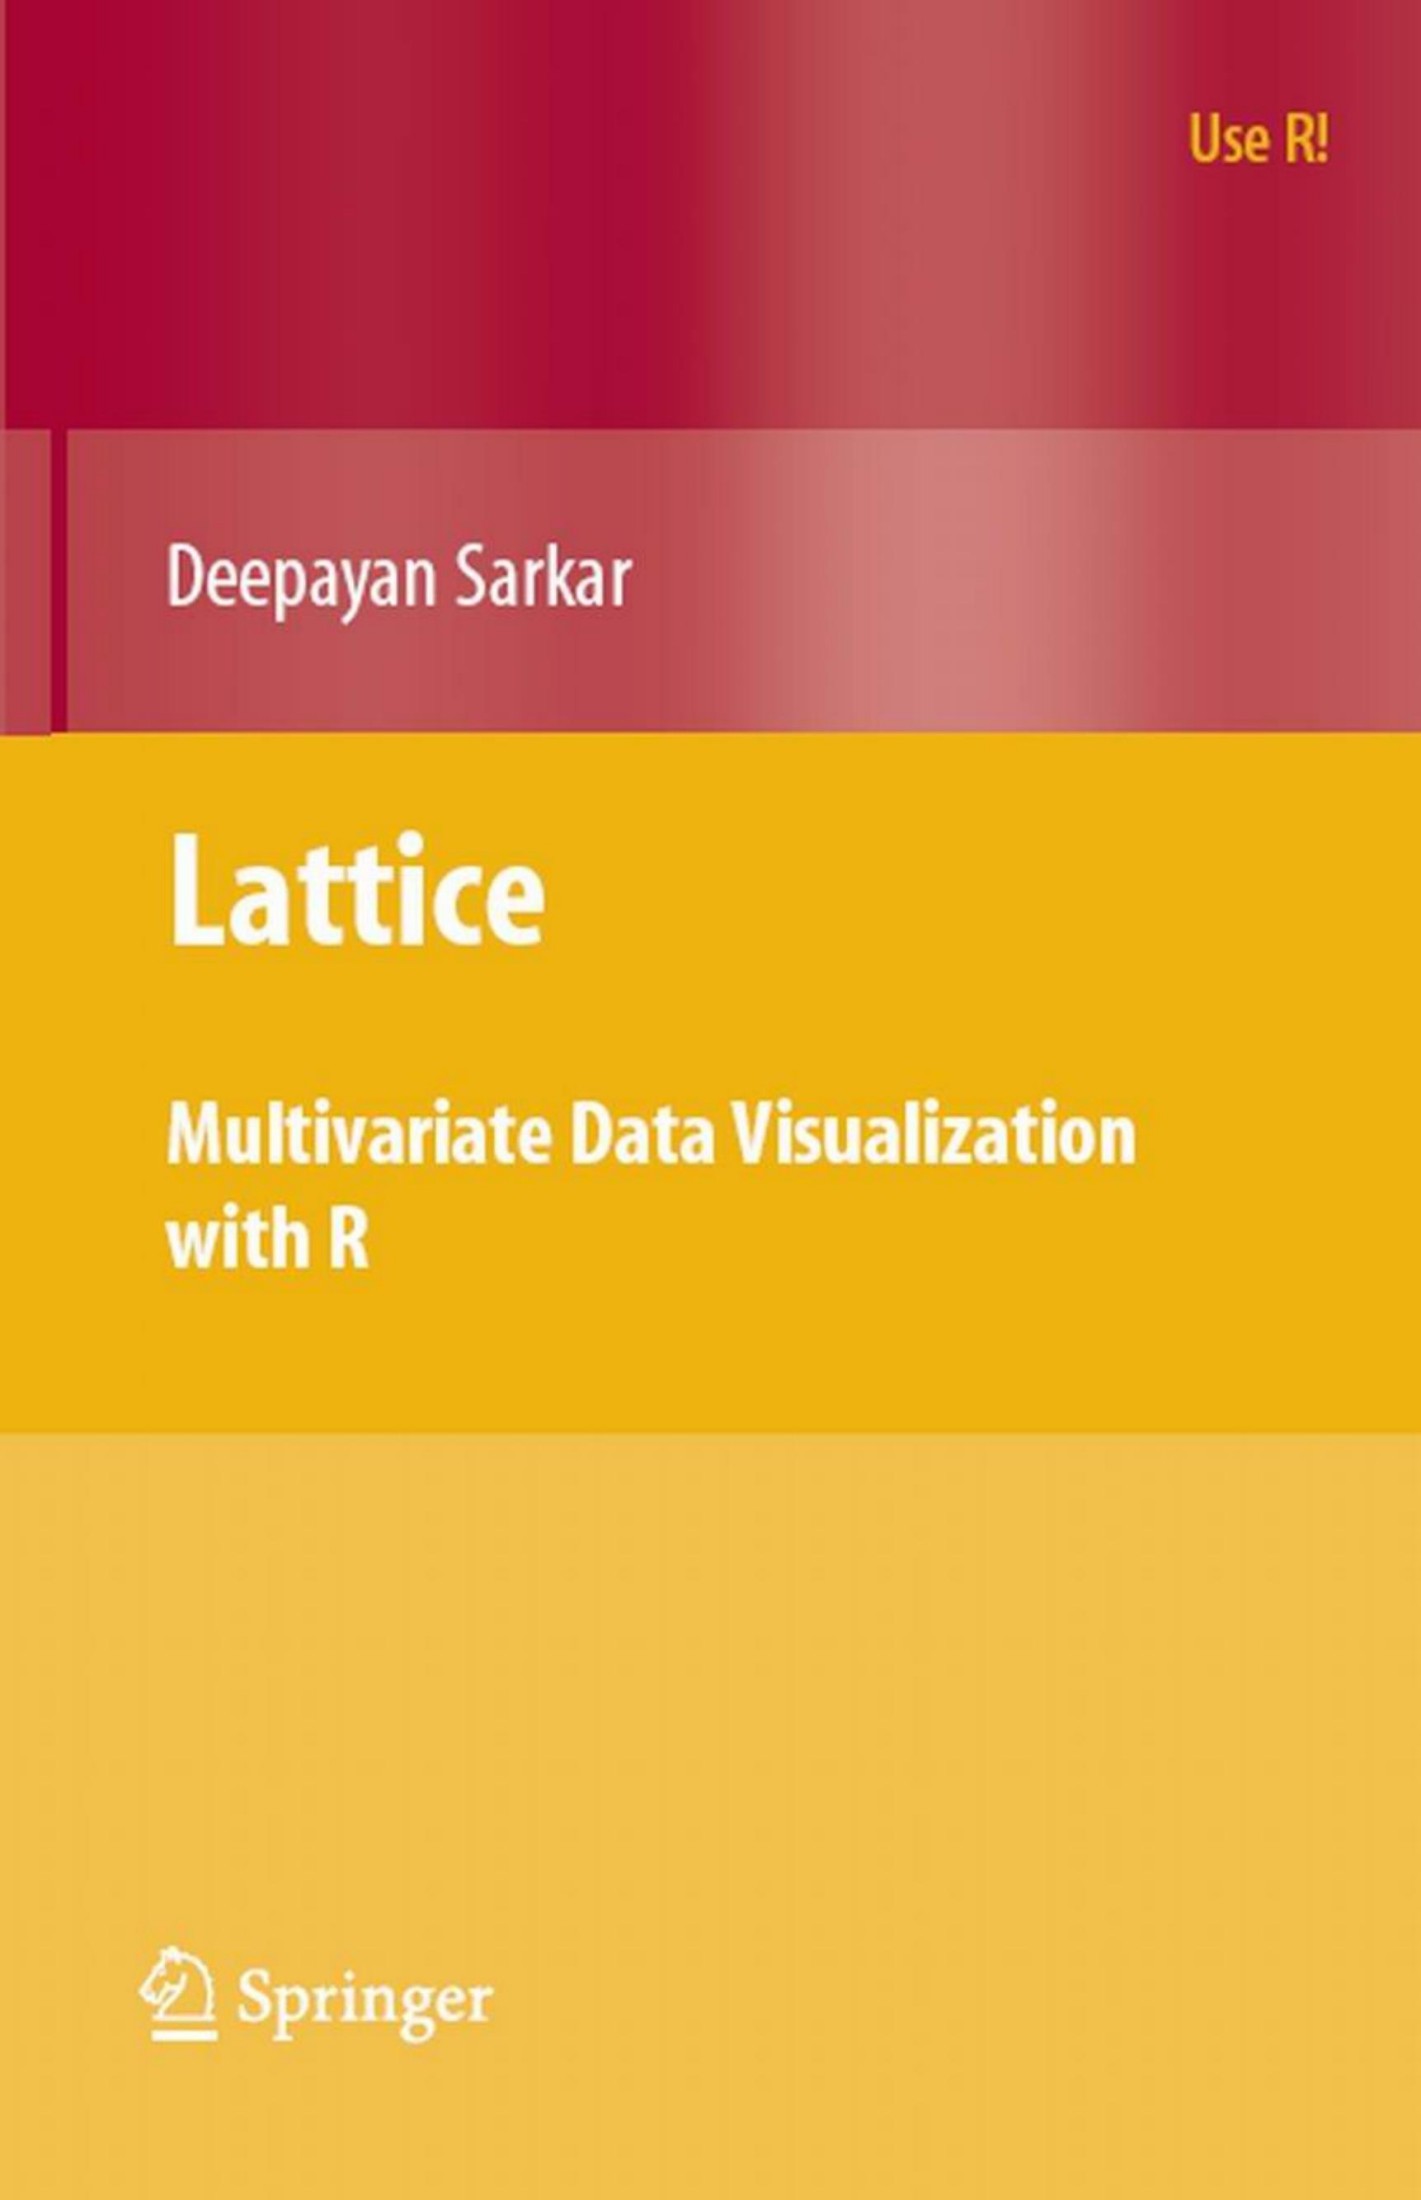 Lattice Multivariate Data Visualization with R (use R)